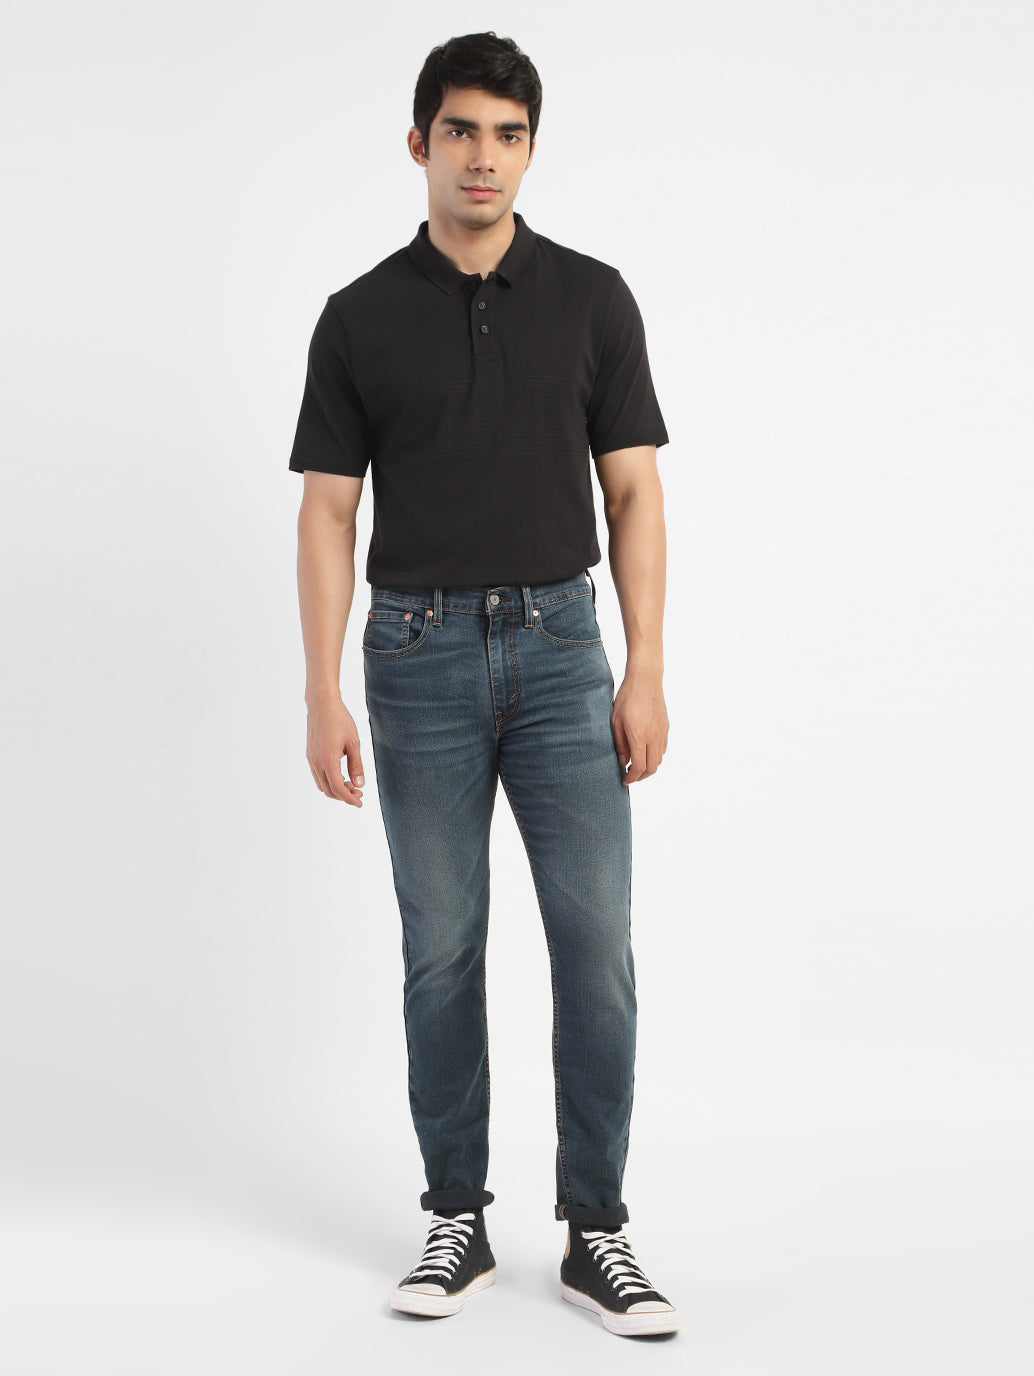 Men's Solid Polo T-shirt Black